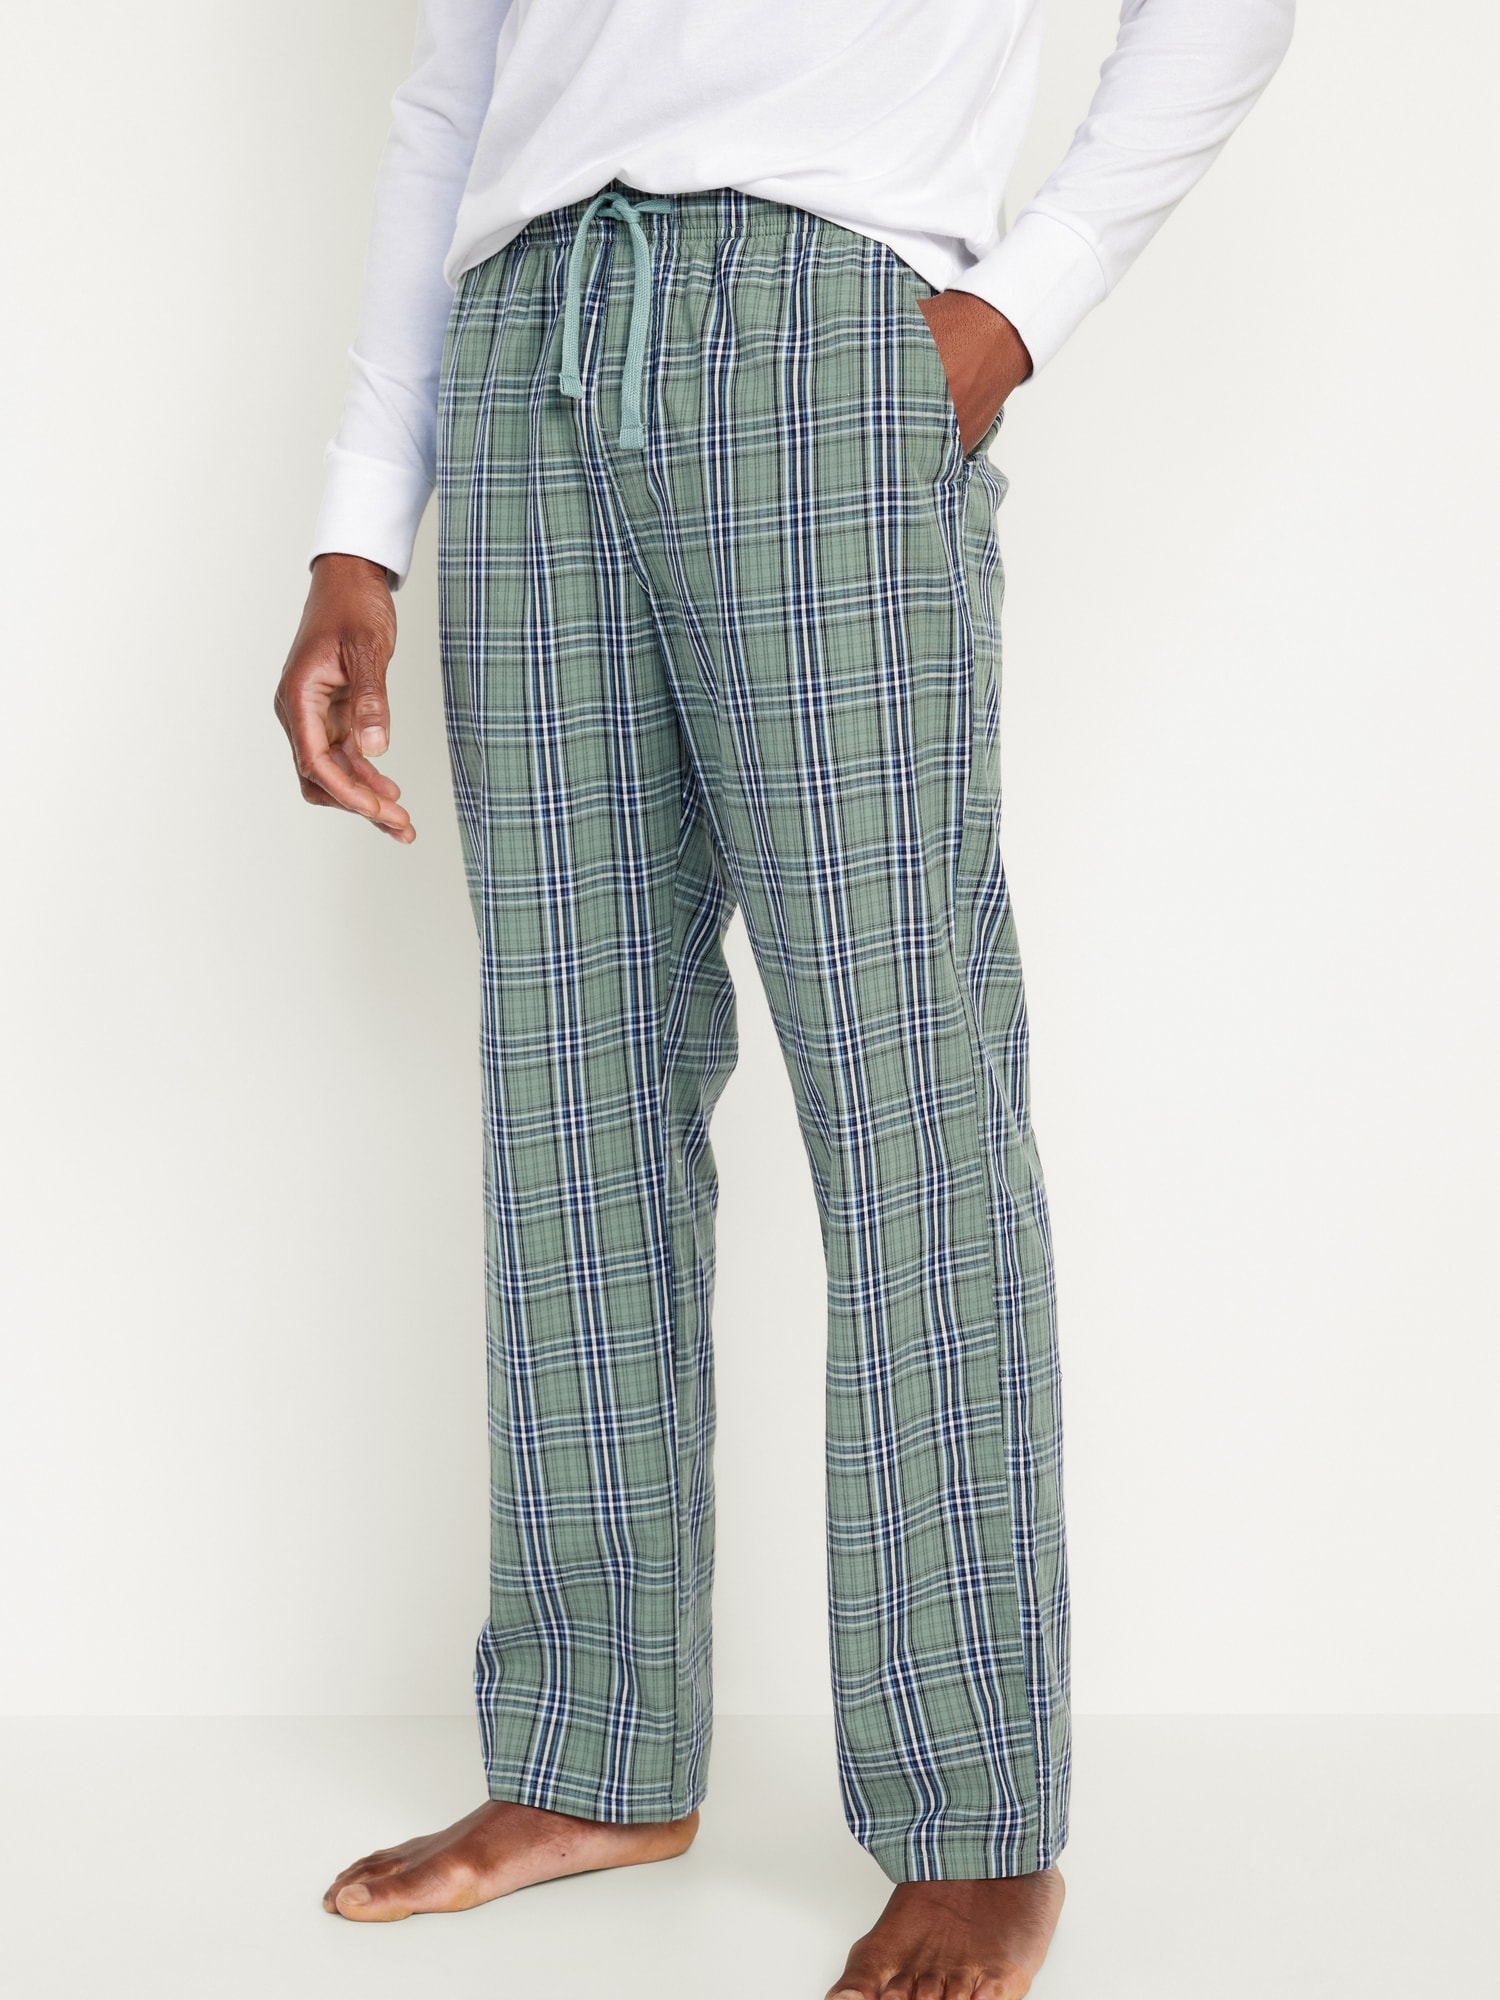 Printed Poplin Pajama Pants for Women, Old Navy